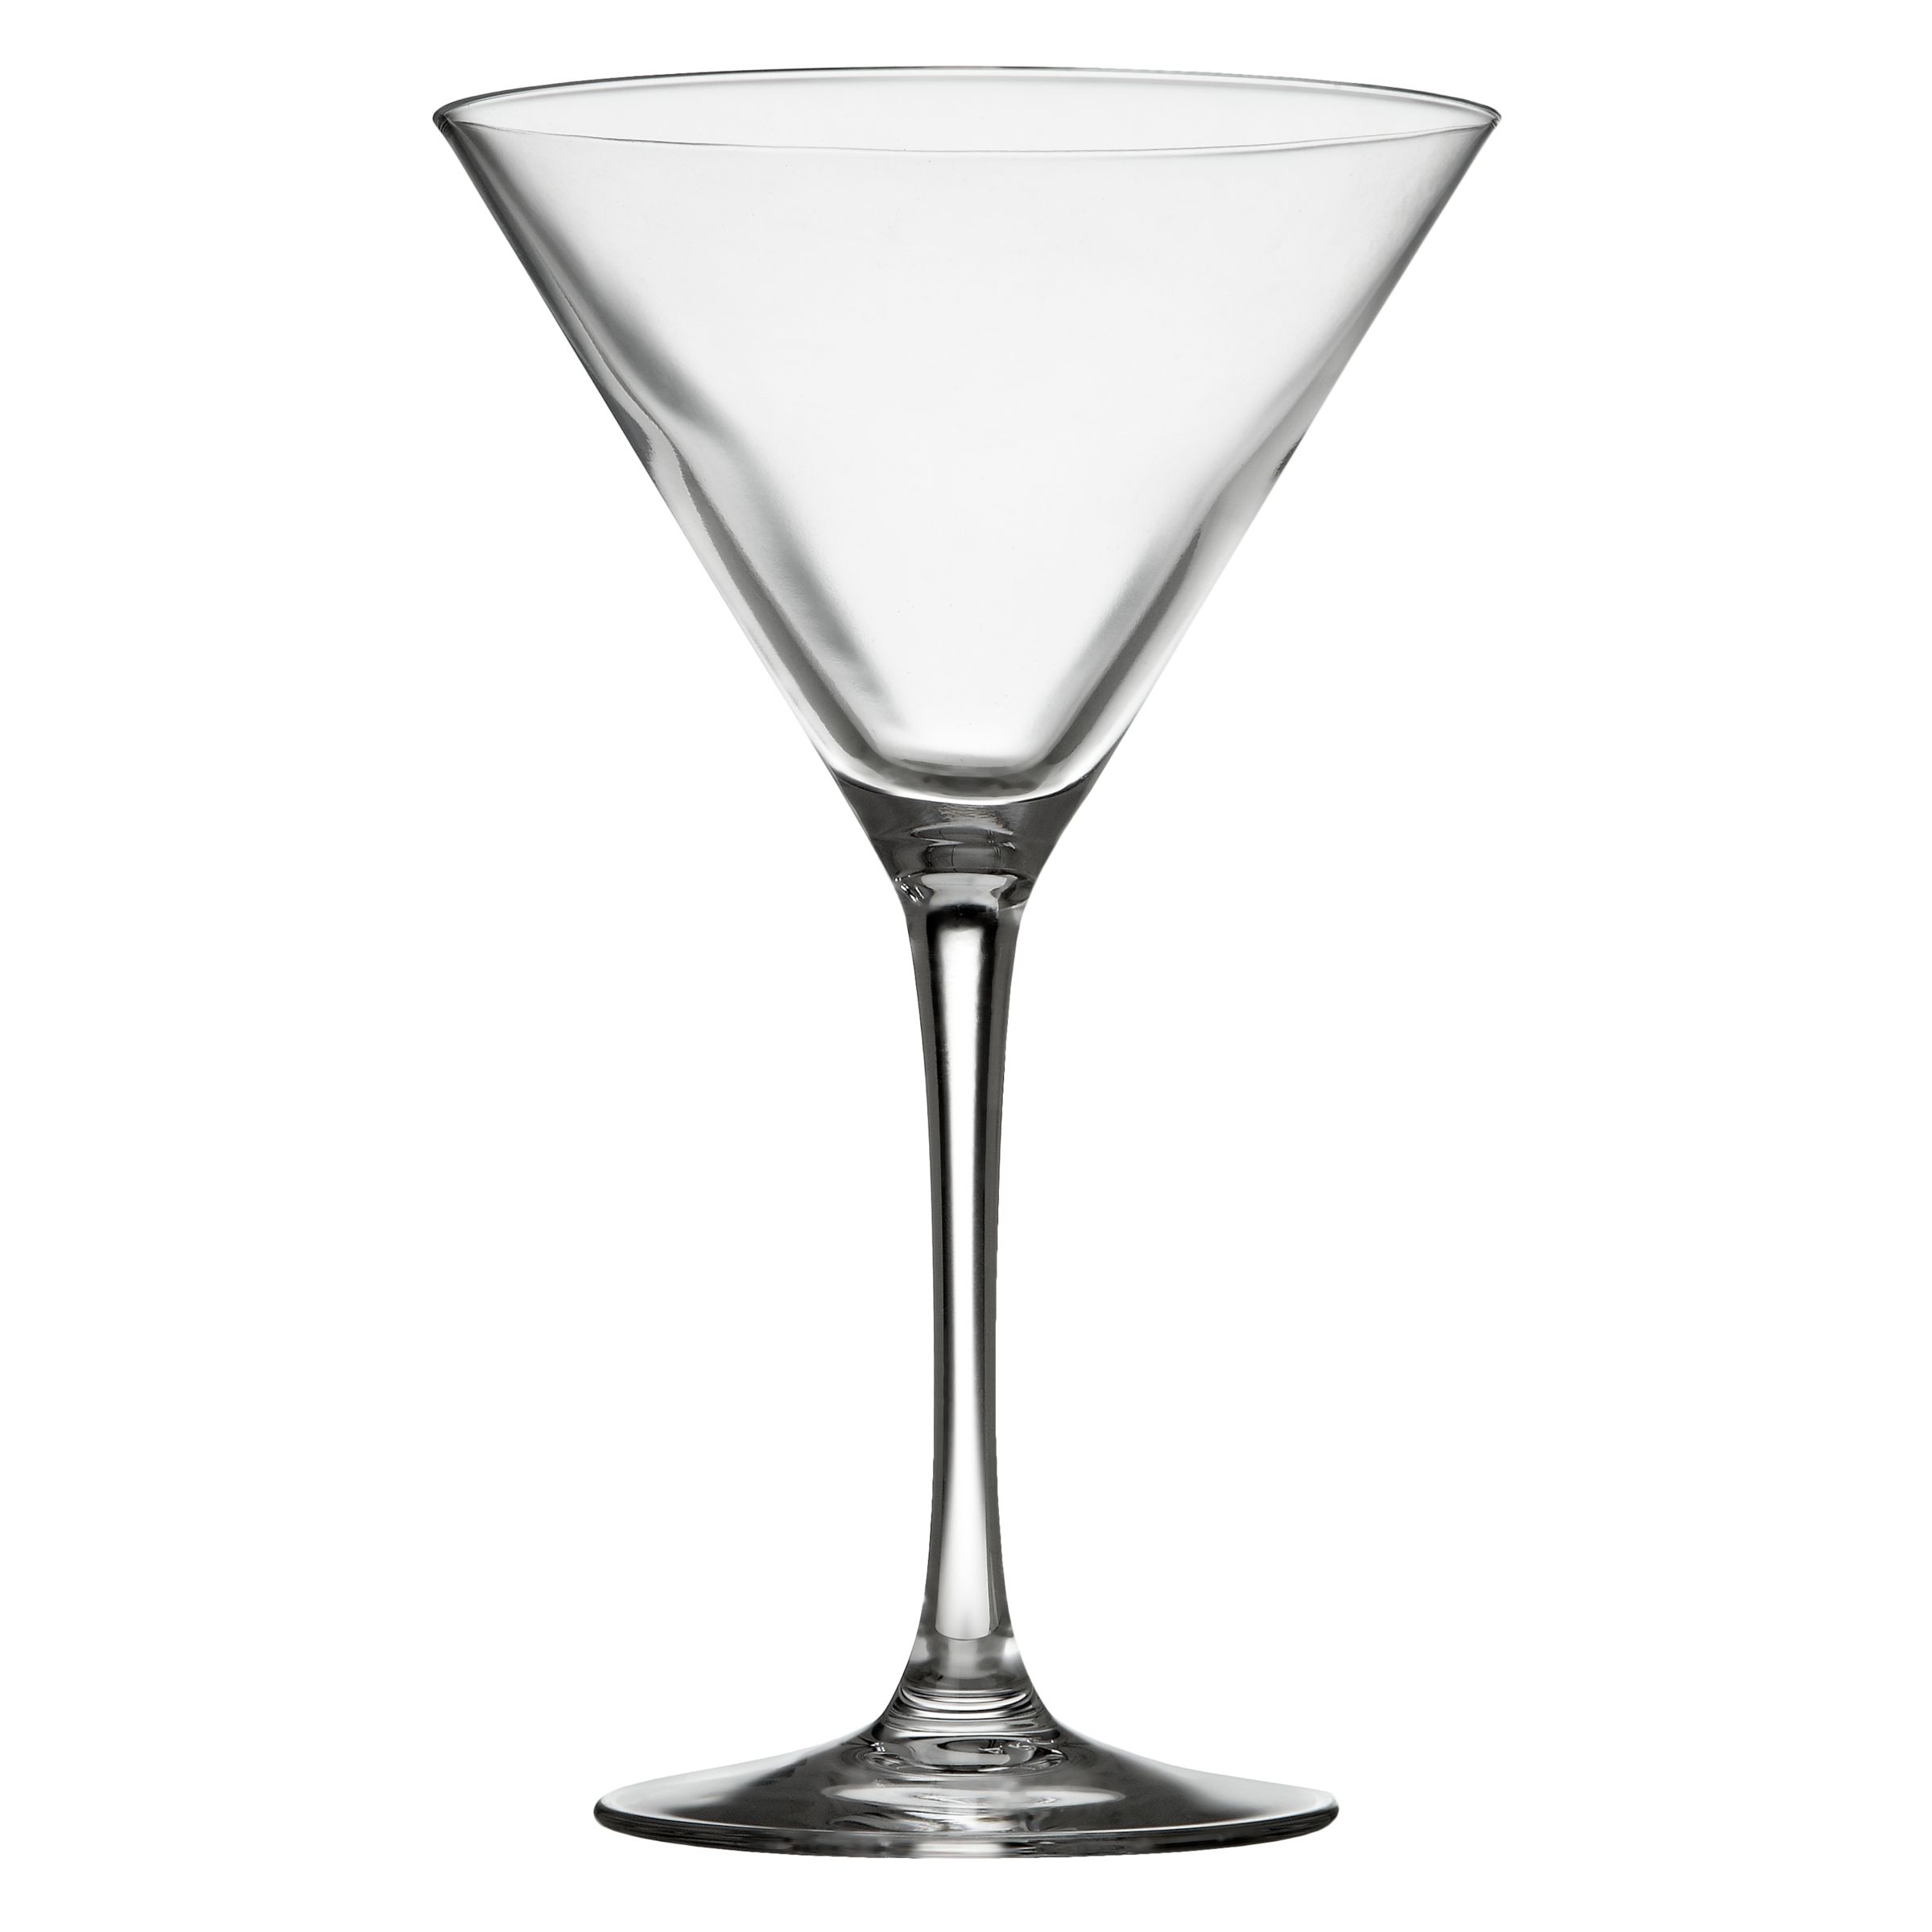 John Lewis & Partners John Lewis & Partners Gin Martini Glasses, Set of 4, 300ml, Clear